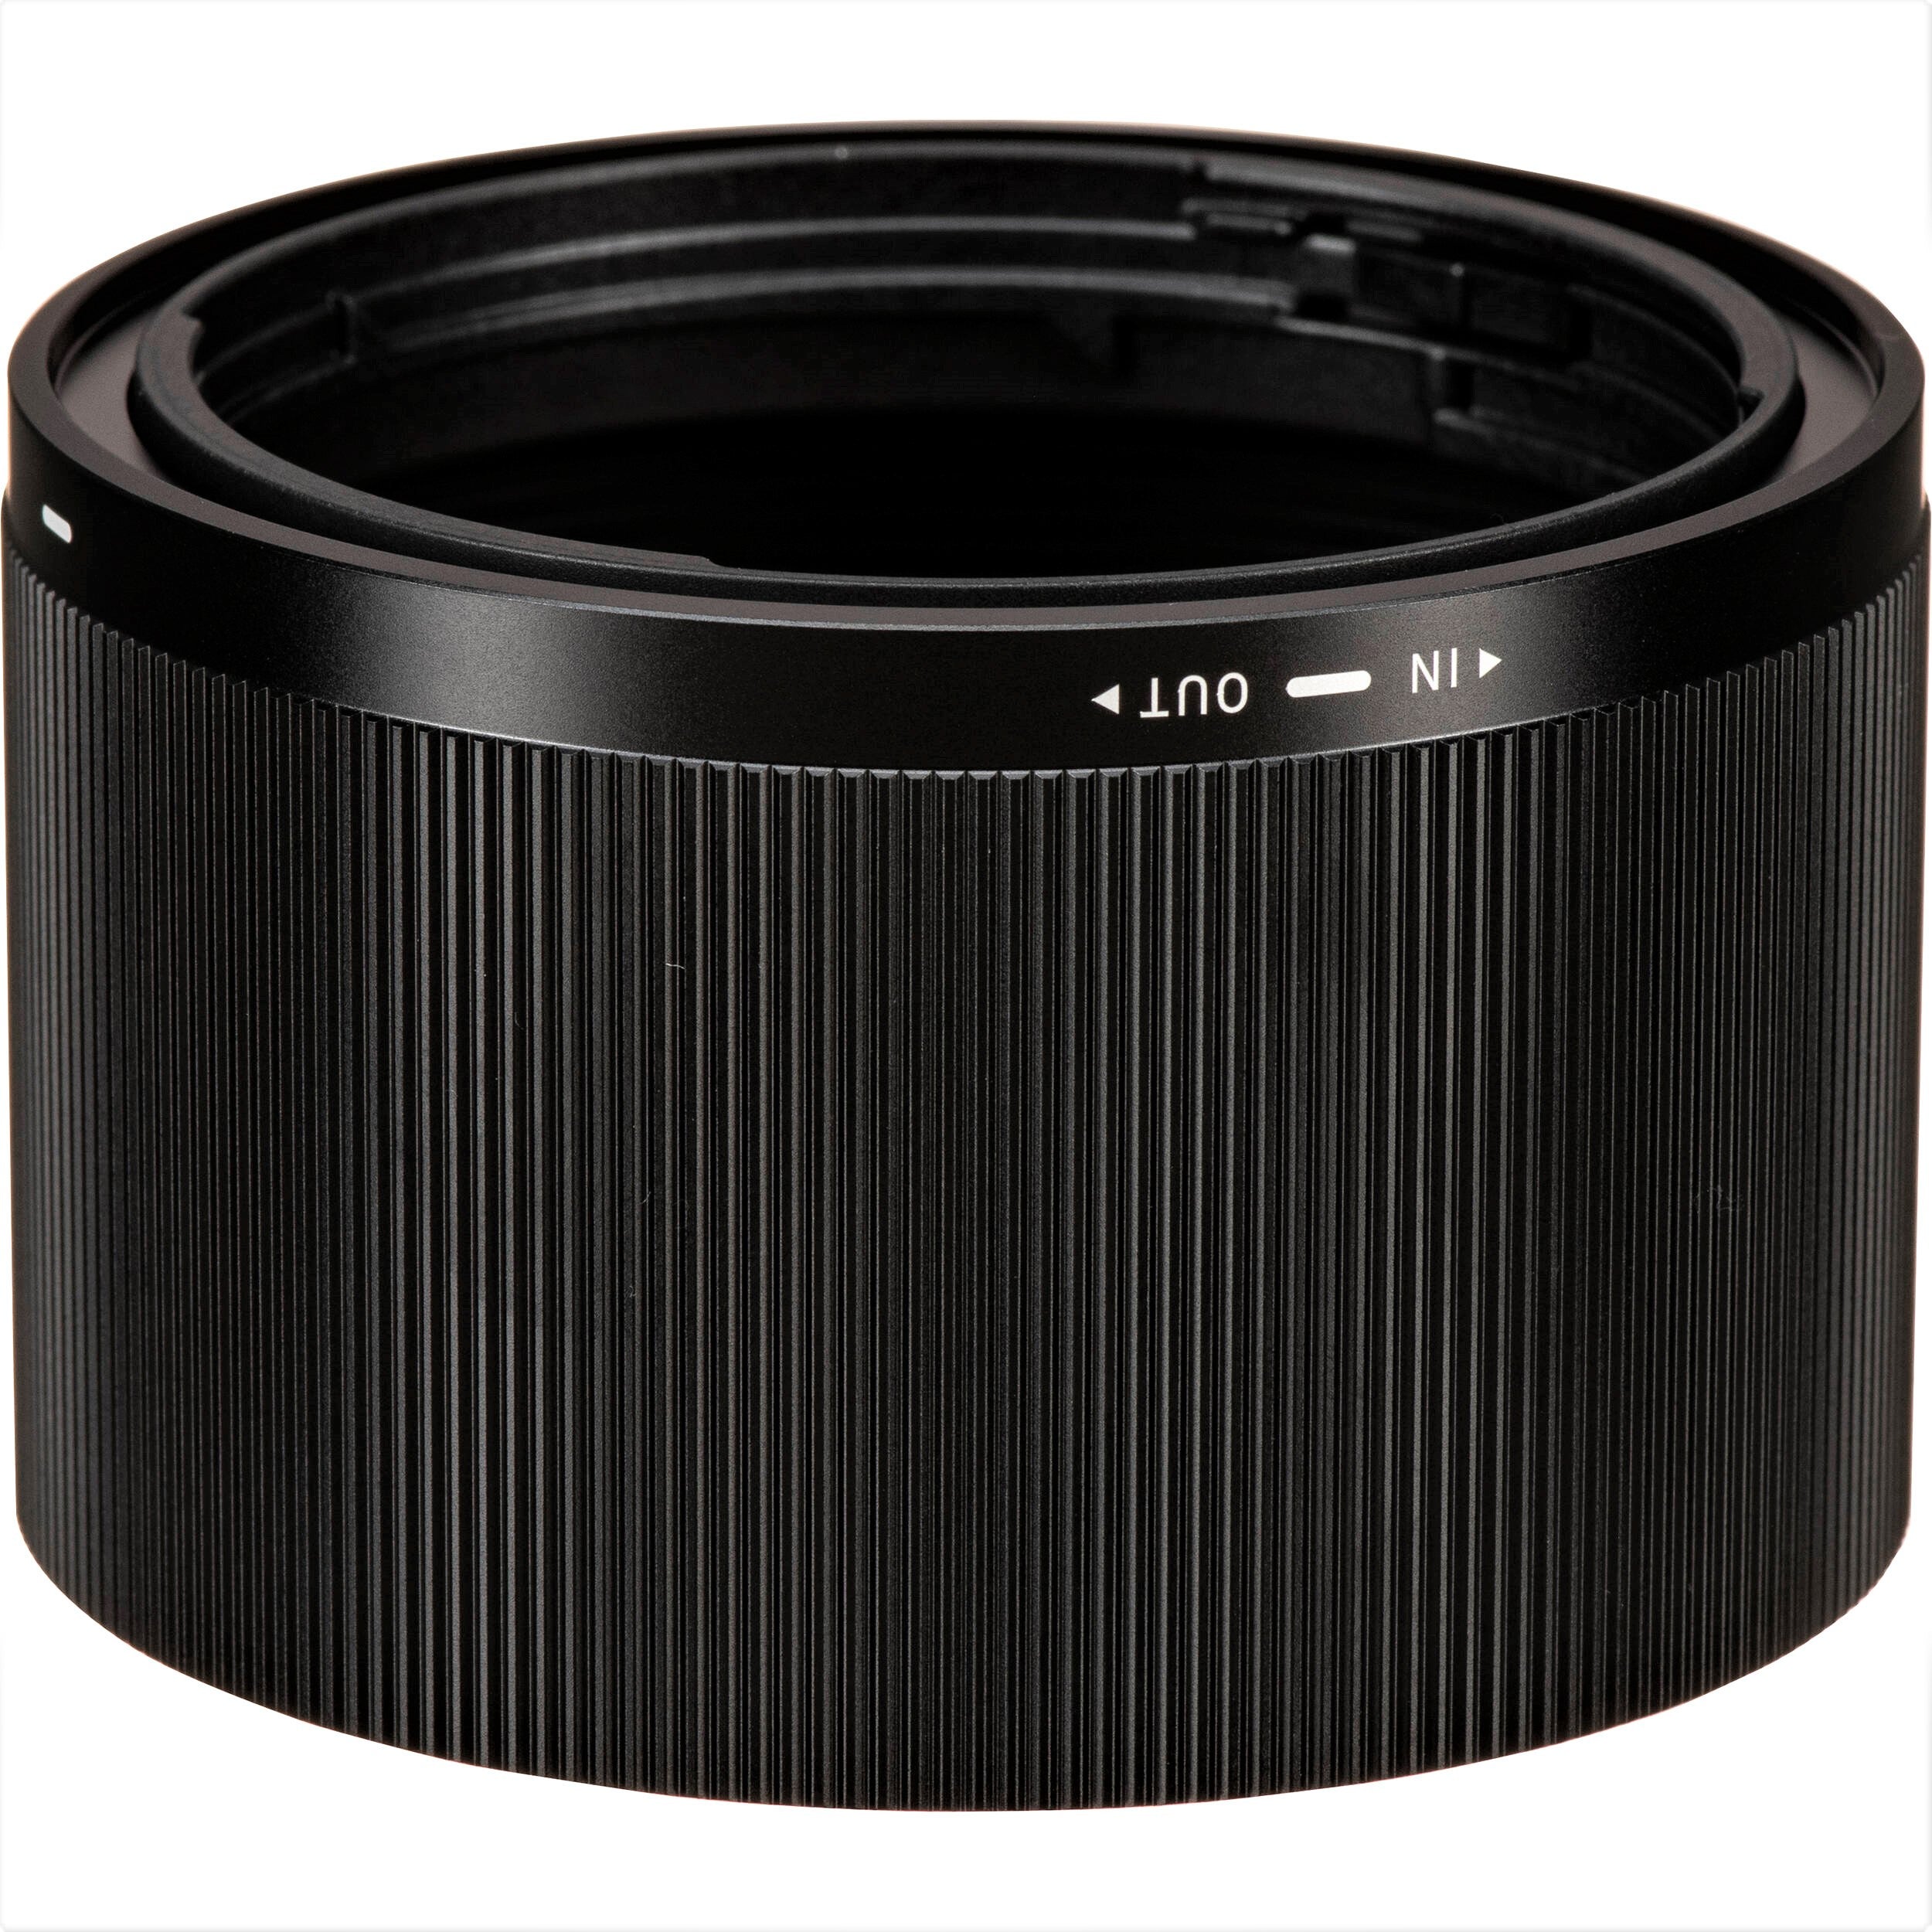 Sigma Lens Hood for 90mm F2.8 DG DN Contemporary Lens